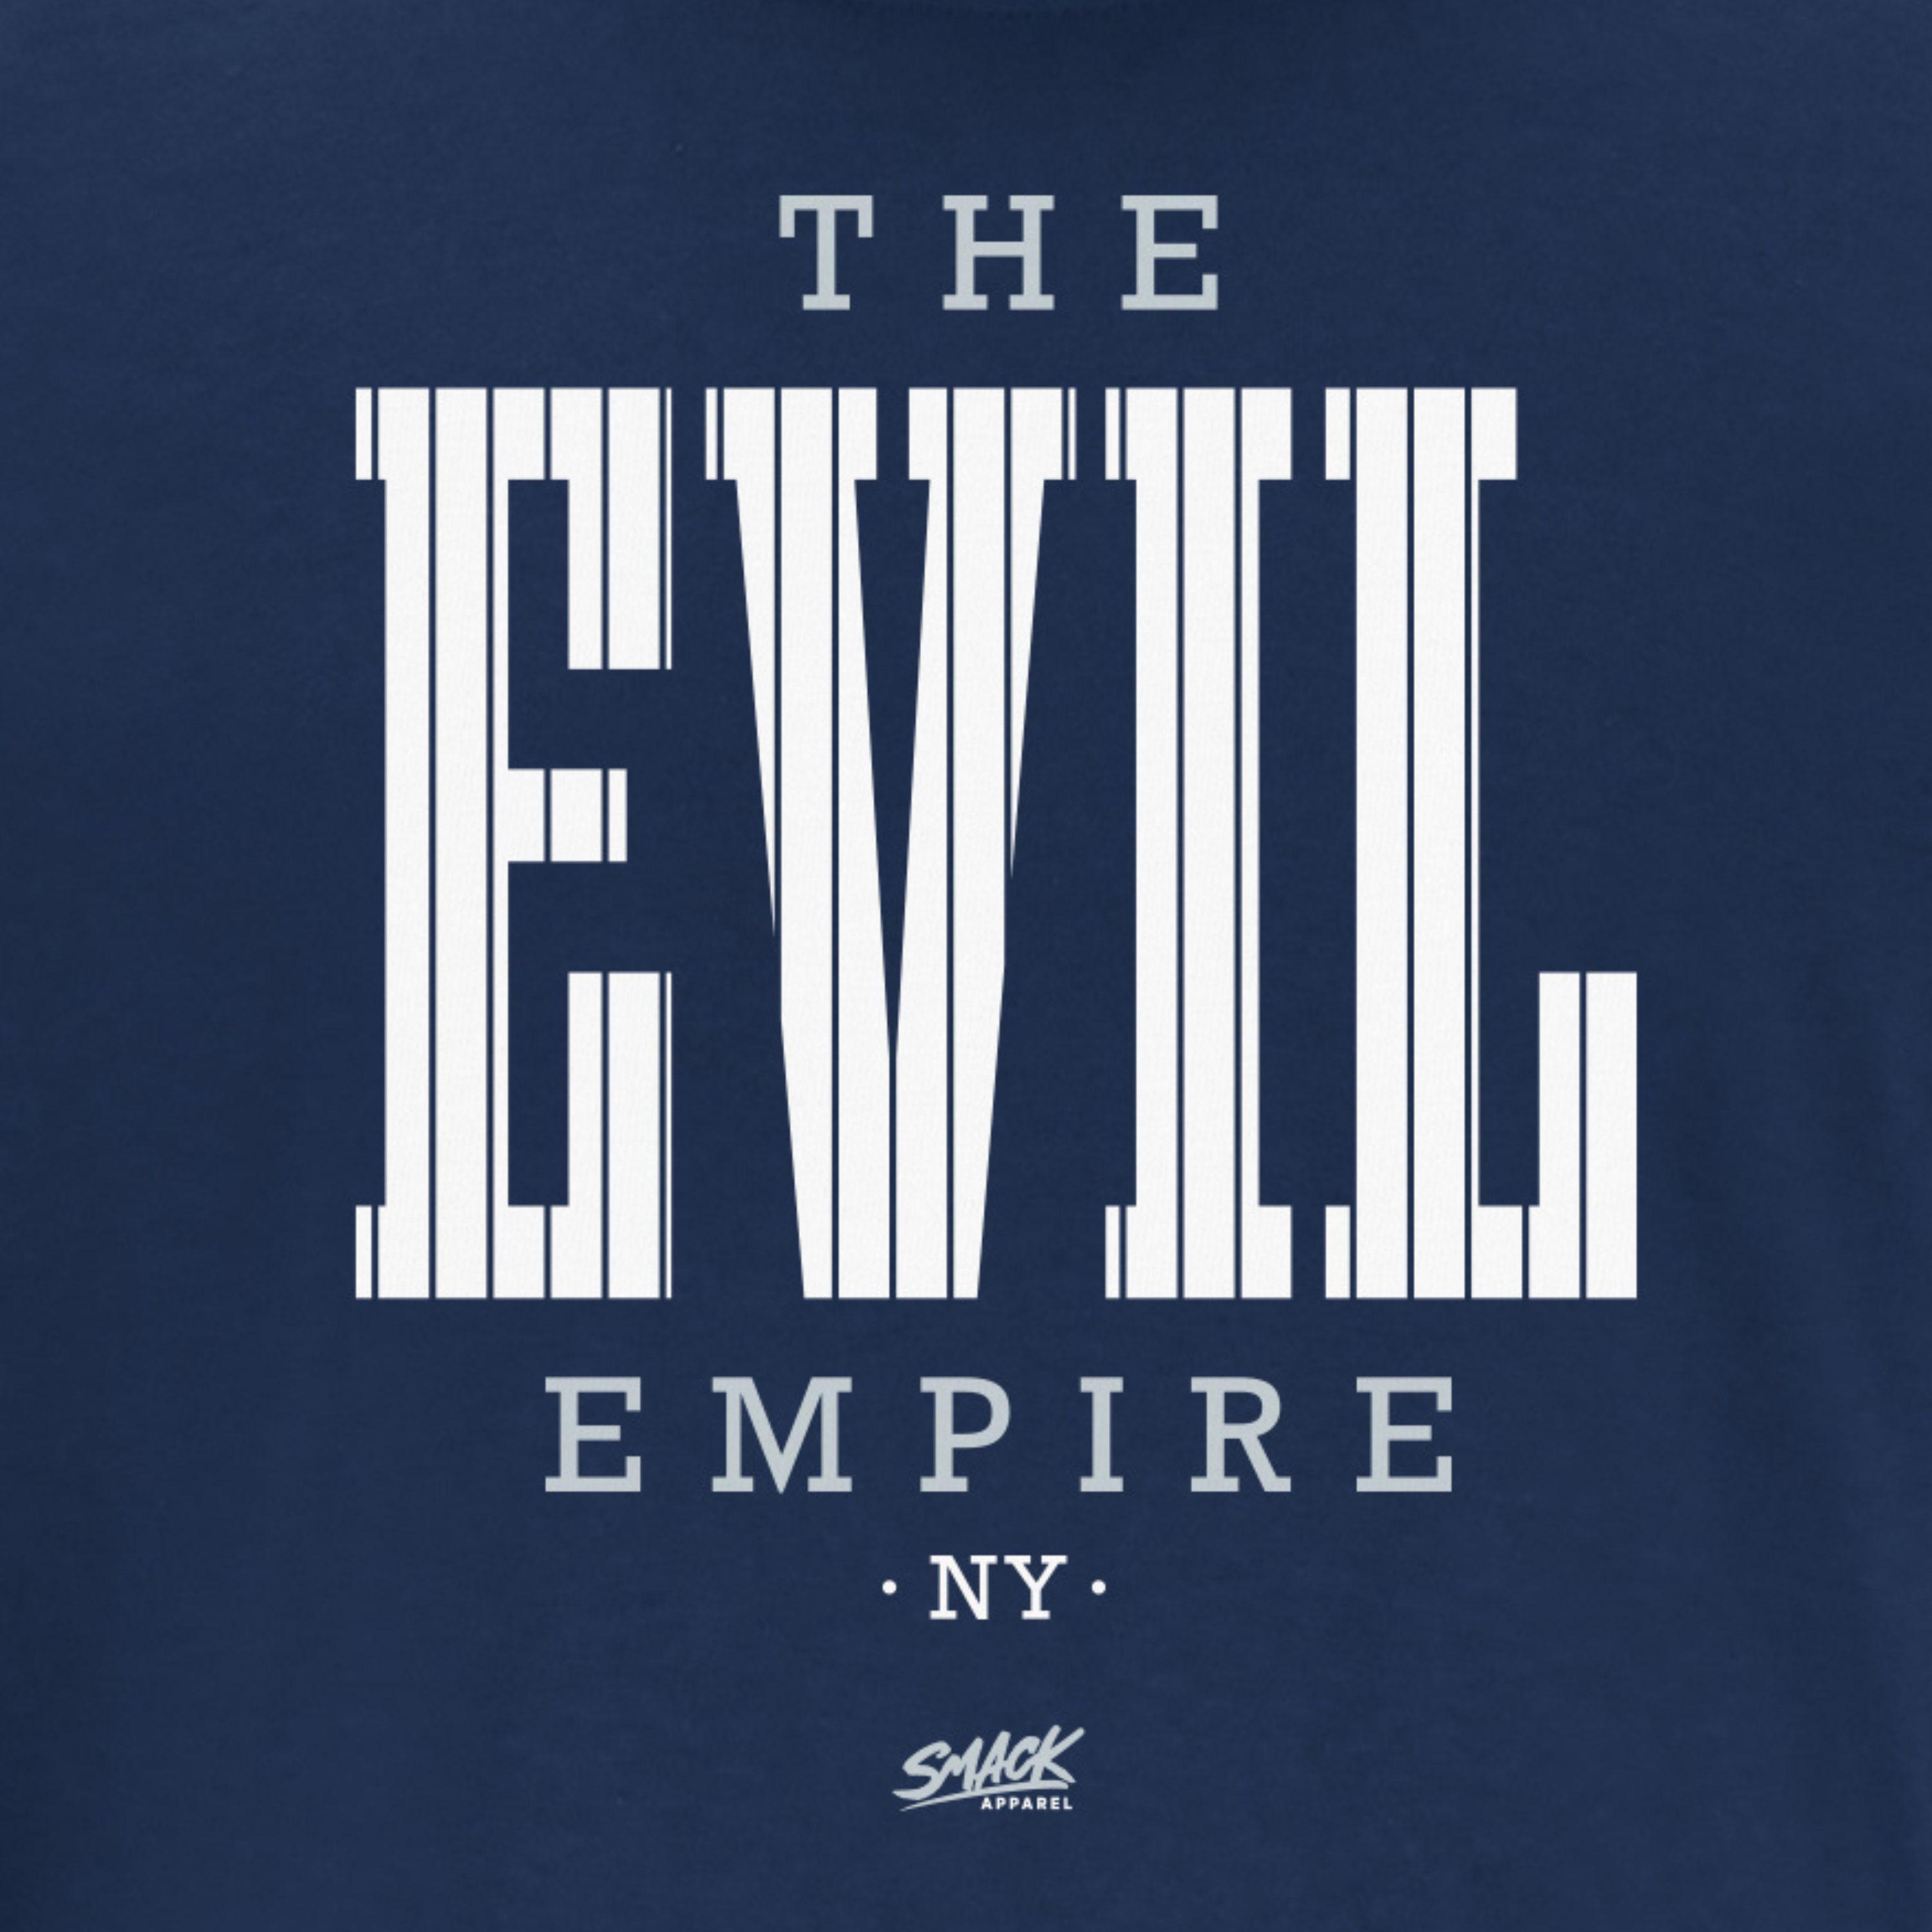 The Evil Empire T-Shirt for New York Baseball Fans (NYY) – Smack Apparel